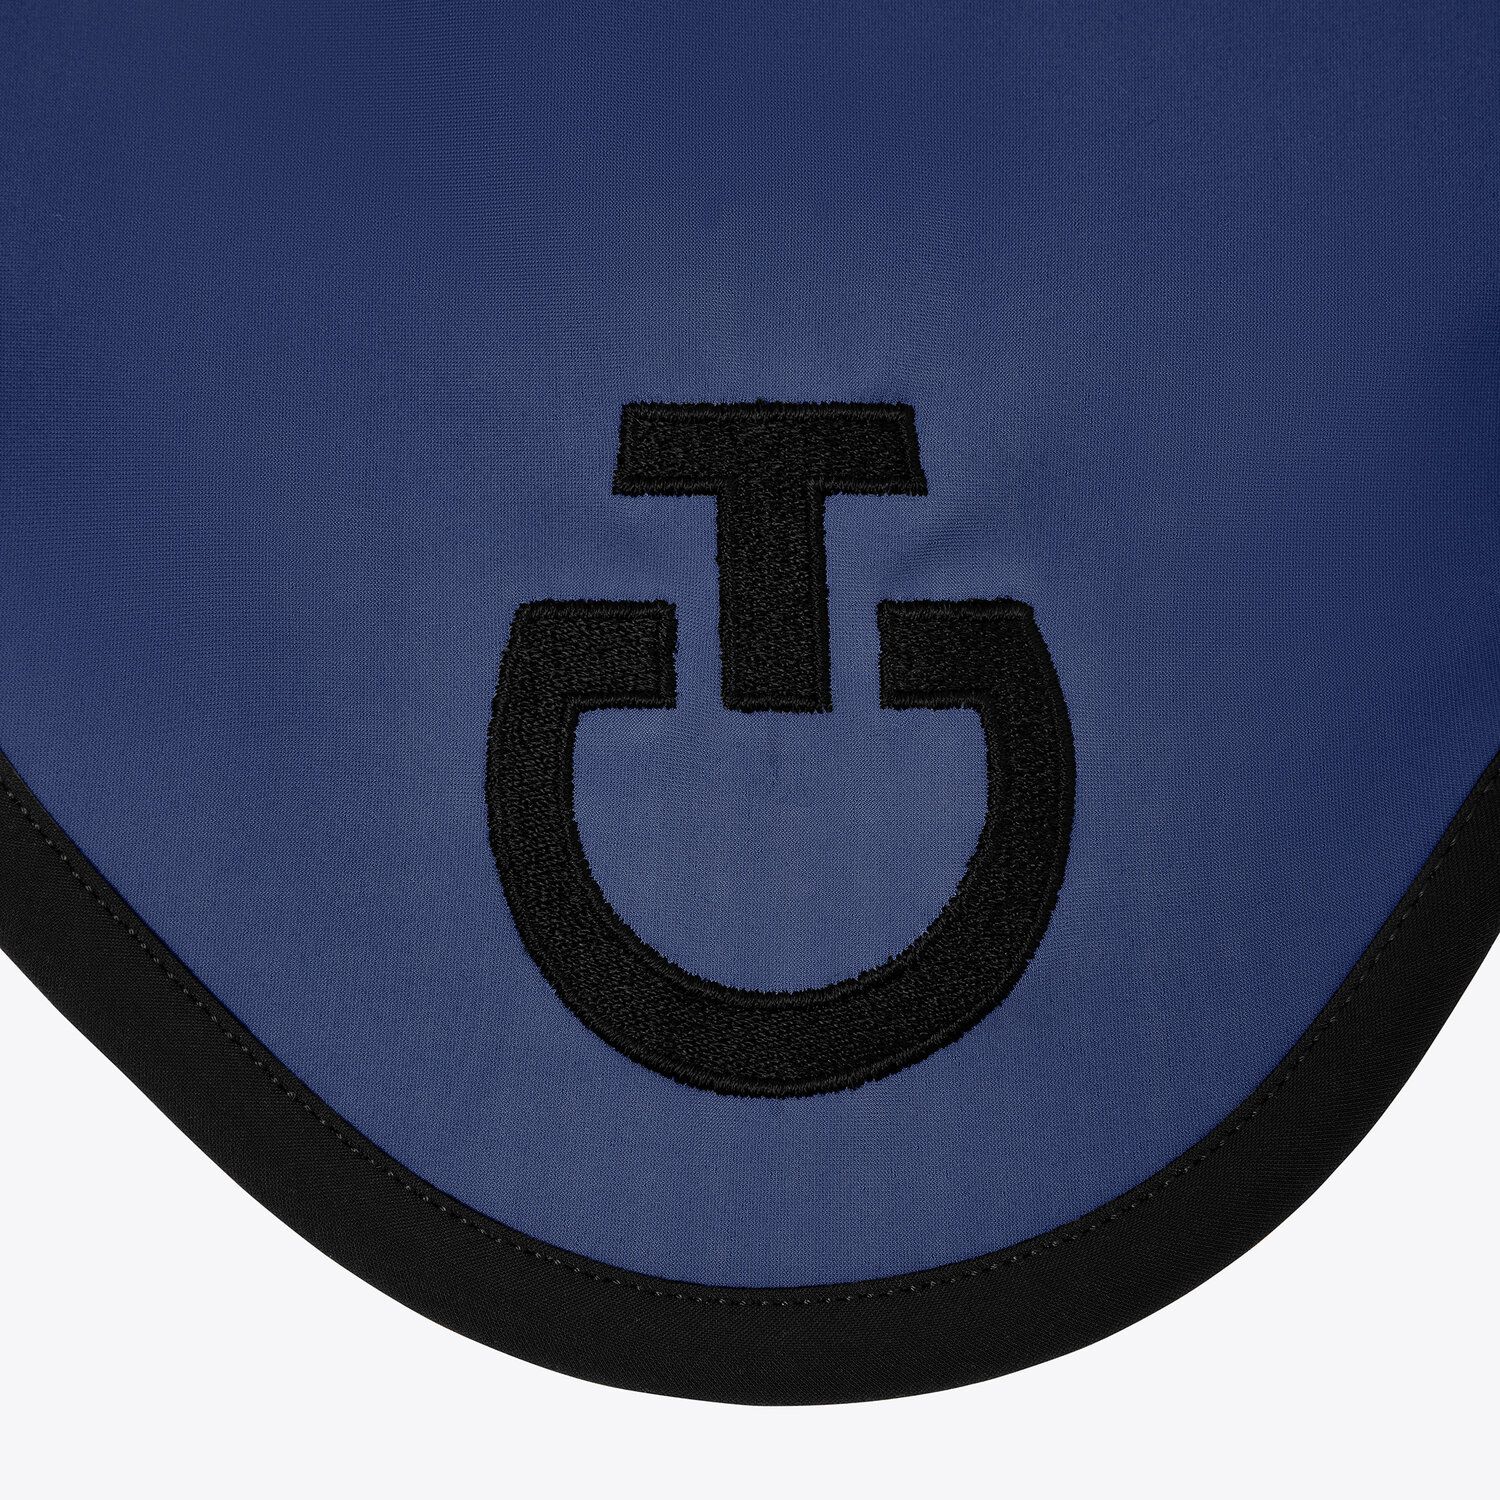 Cavalleria Toscana Lightweight jersey earnet ROYAL BLUE/BLACK-2